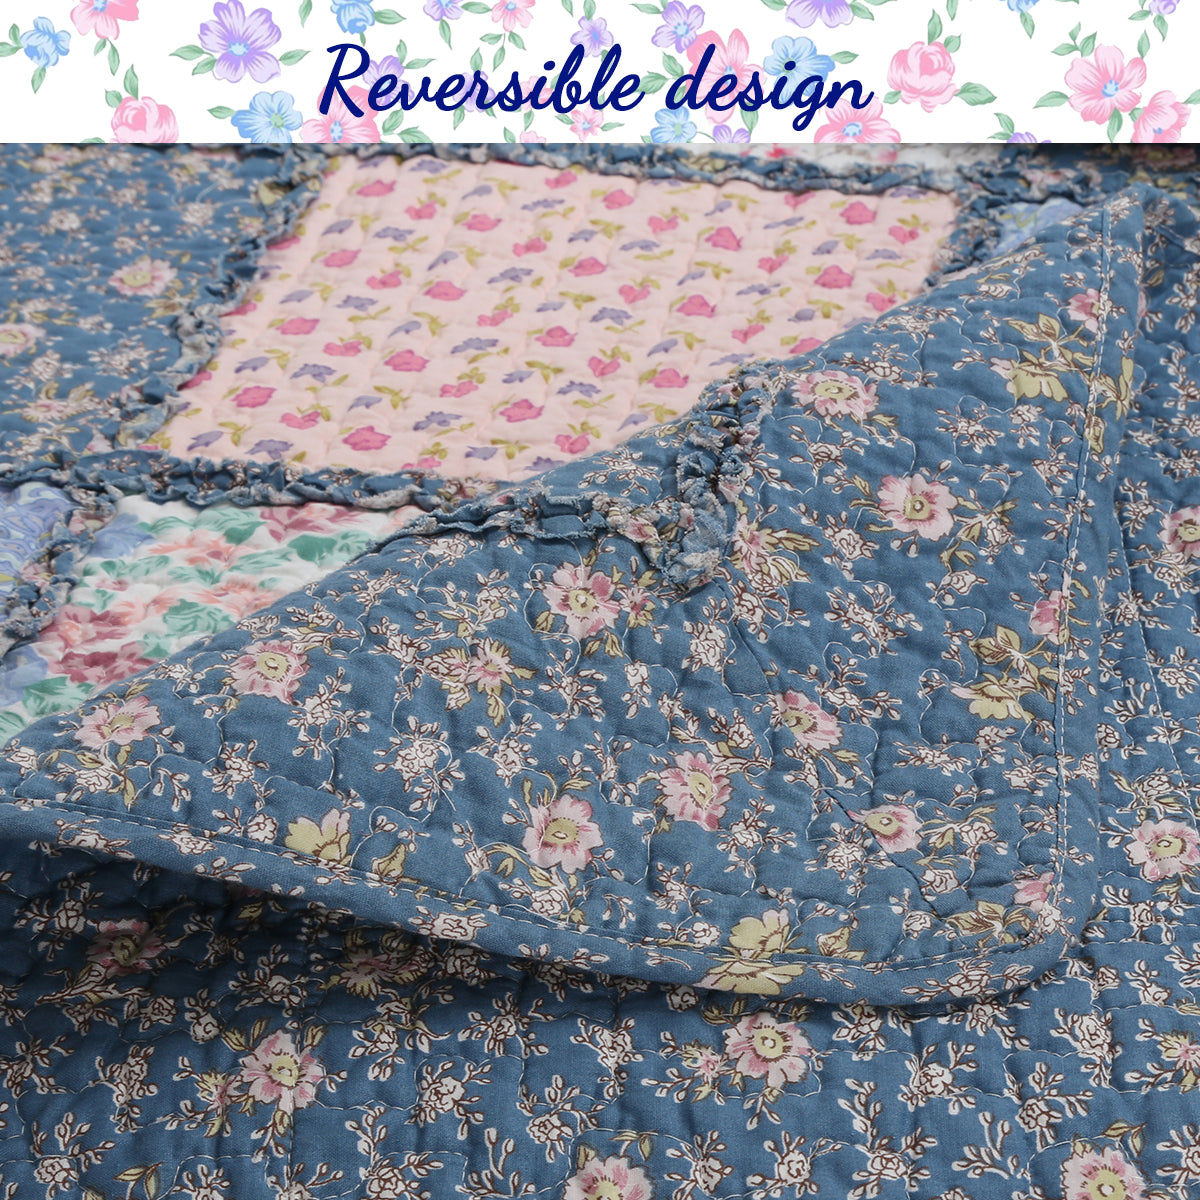 Mraz Blue Pink Ruffle Real Patchwork Cotton 3-Piece Reversible Quilt Bedding Set